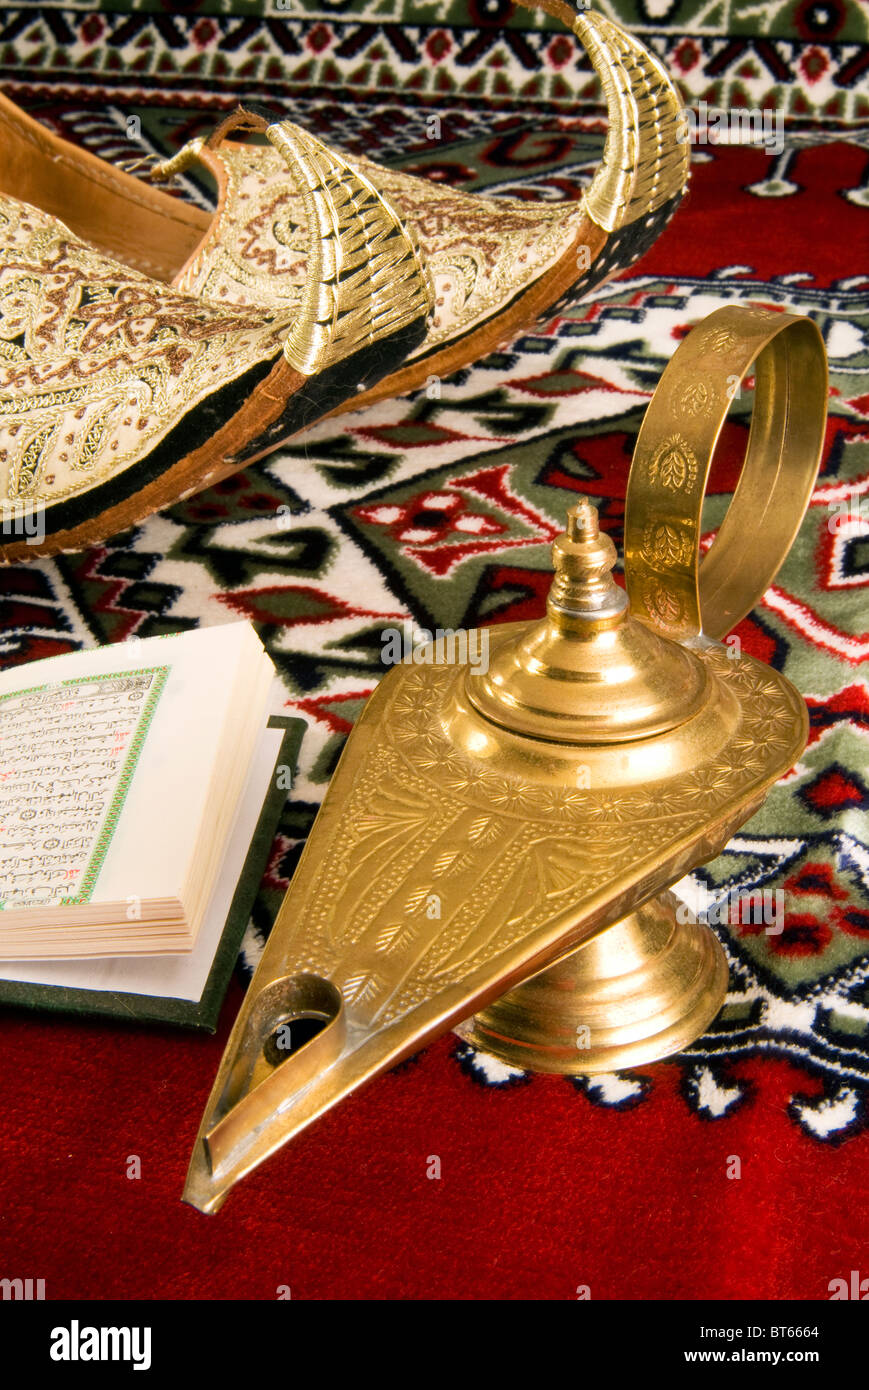 Lampe d'Aladin, arabe, coran chaussures sur un tapis Photo Stock - Alamy